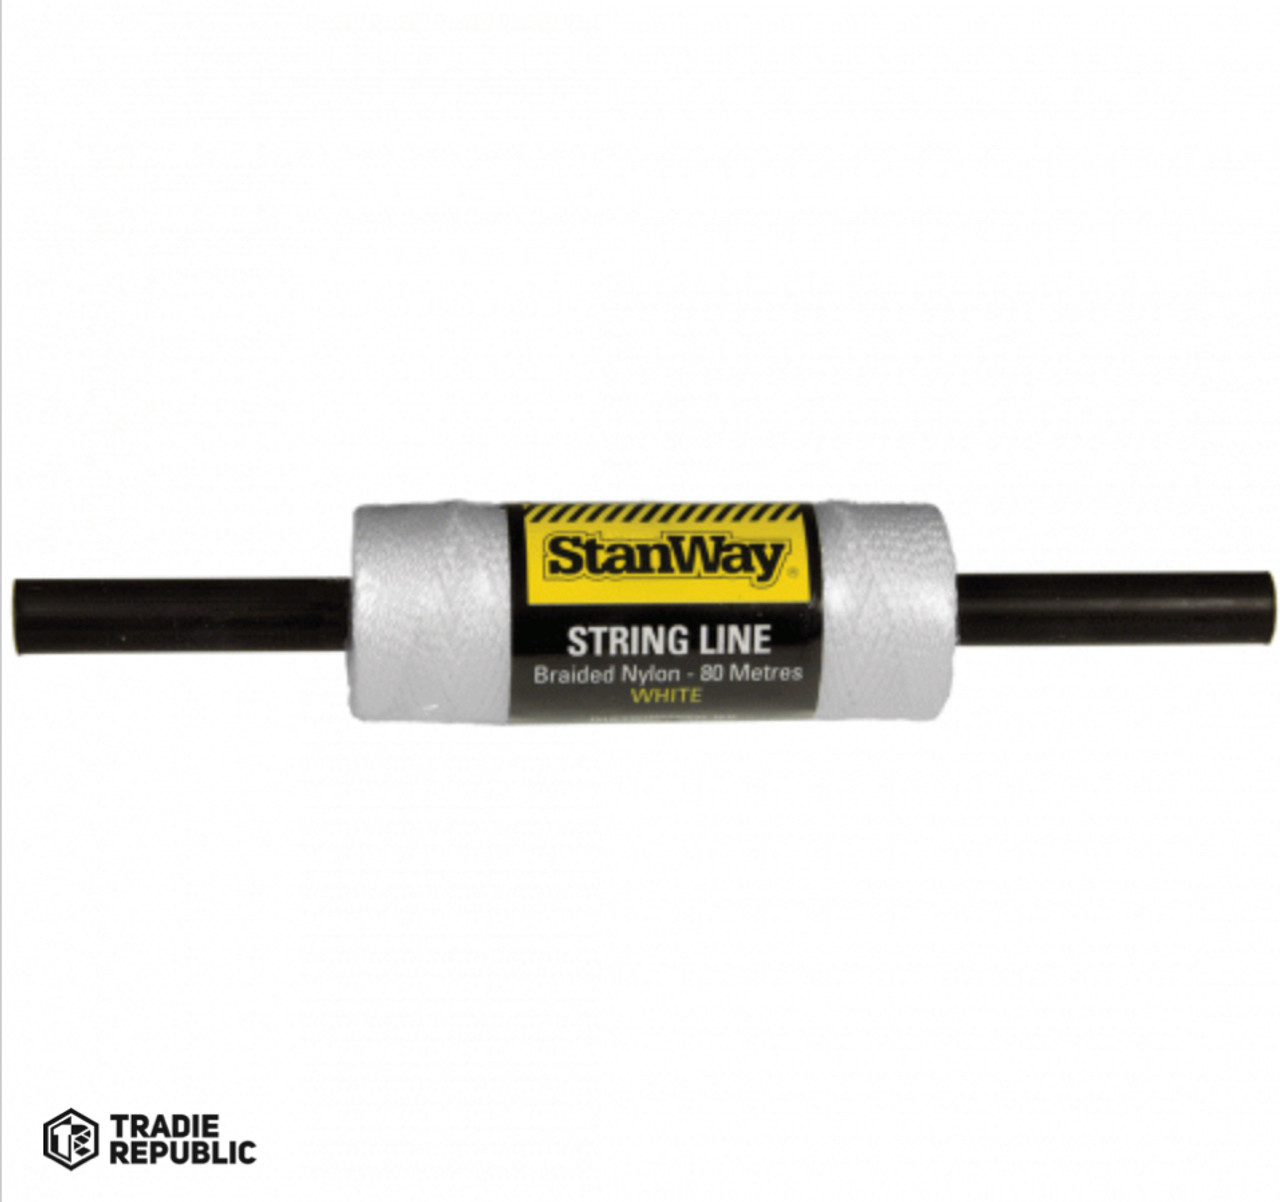  Stanway Braided Nylon String Line - 80m